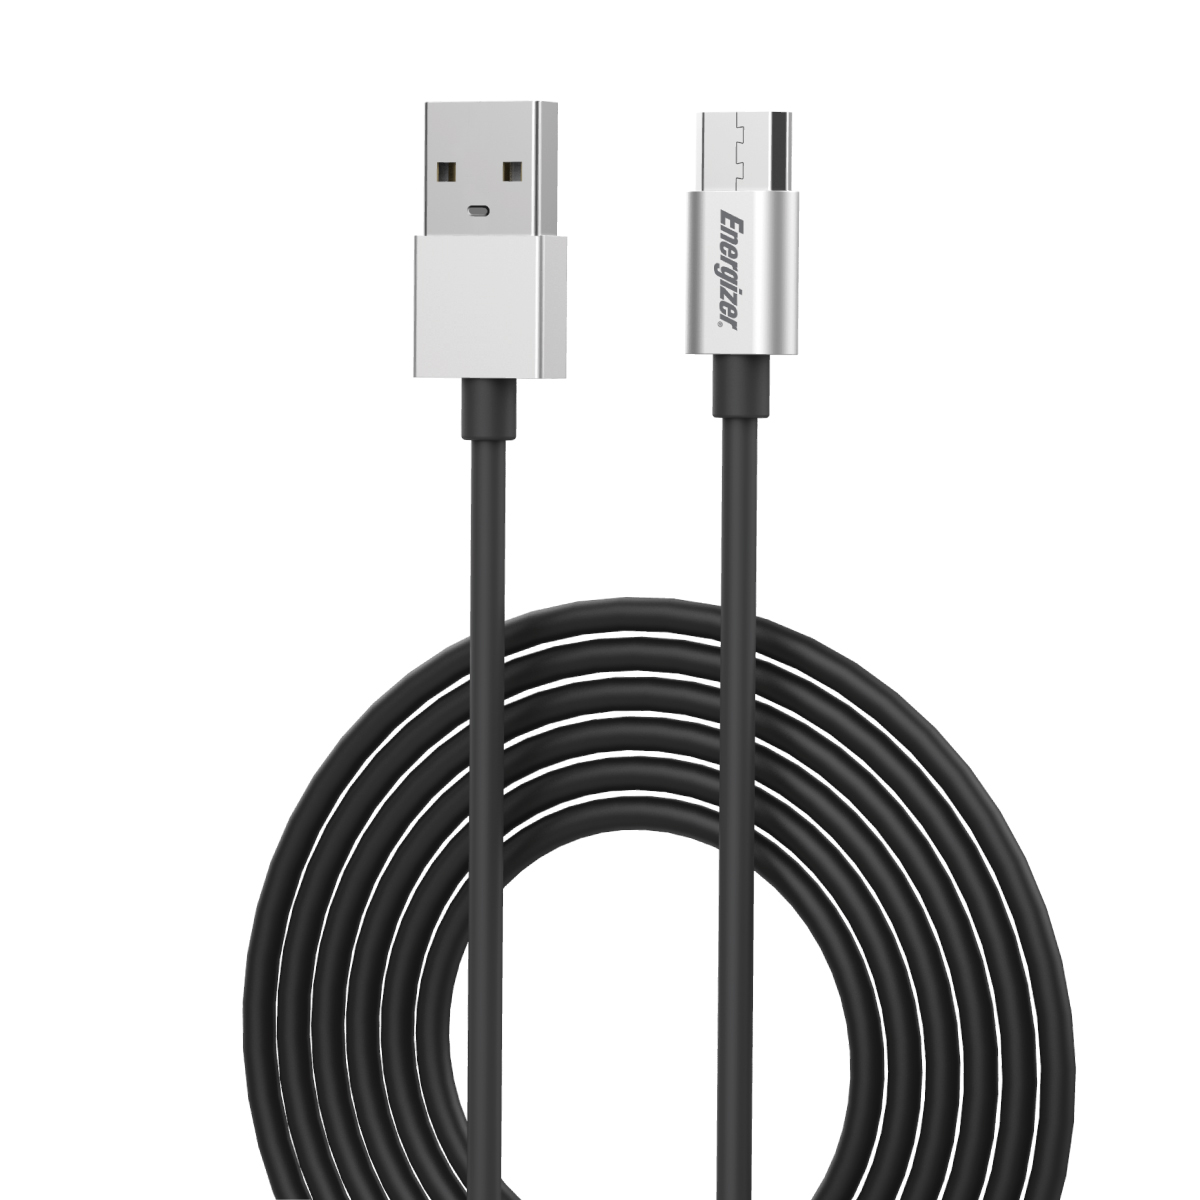 EU Micro USB Cable 10ft BK